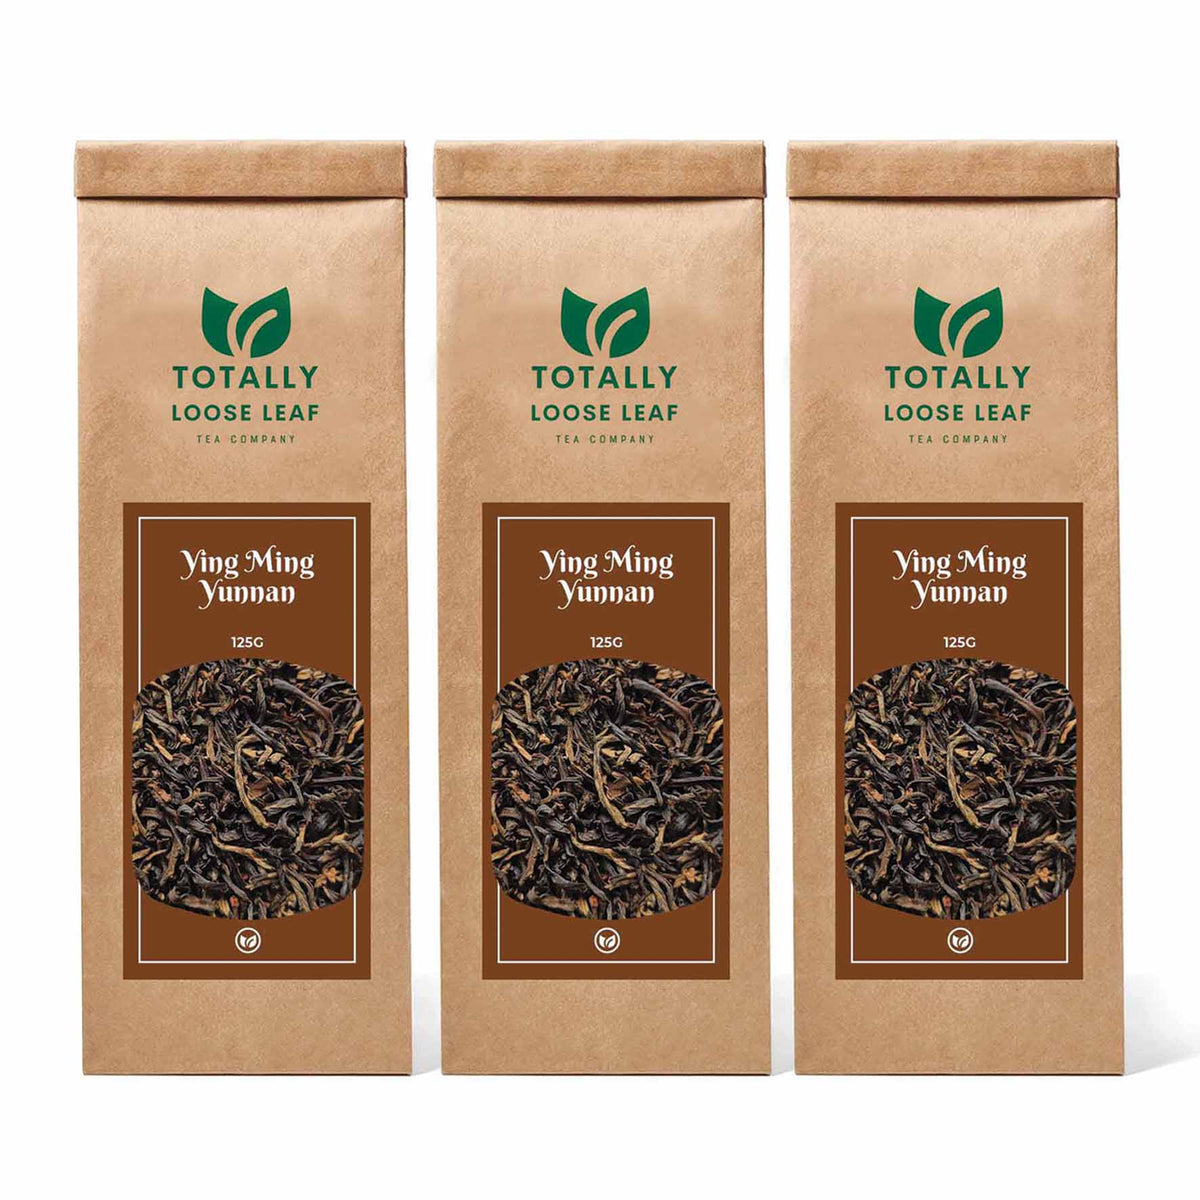 Ying Ming Yunnan Black Loose Leaf Tea - three pouches